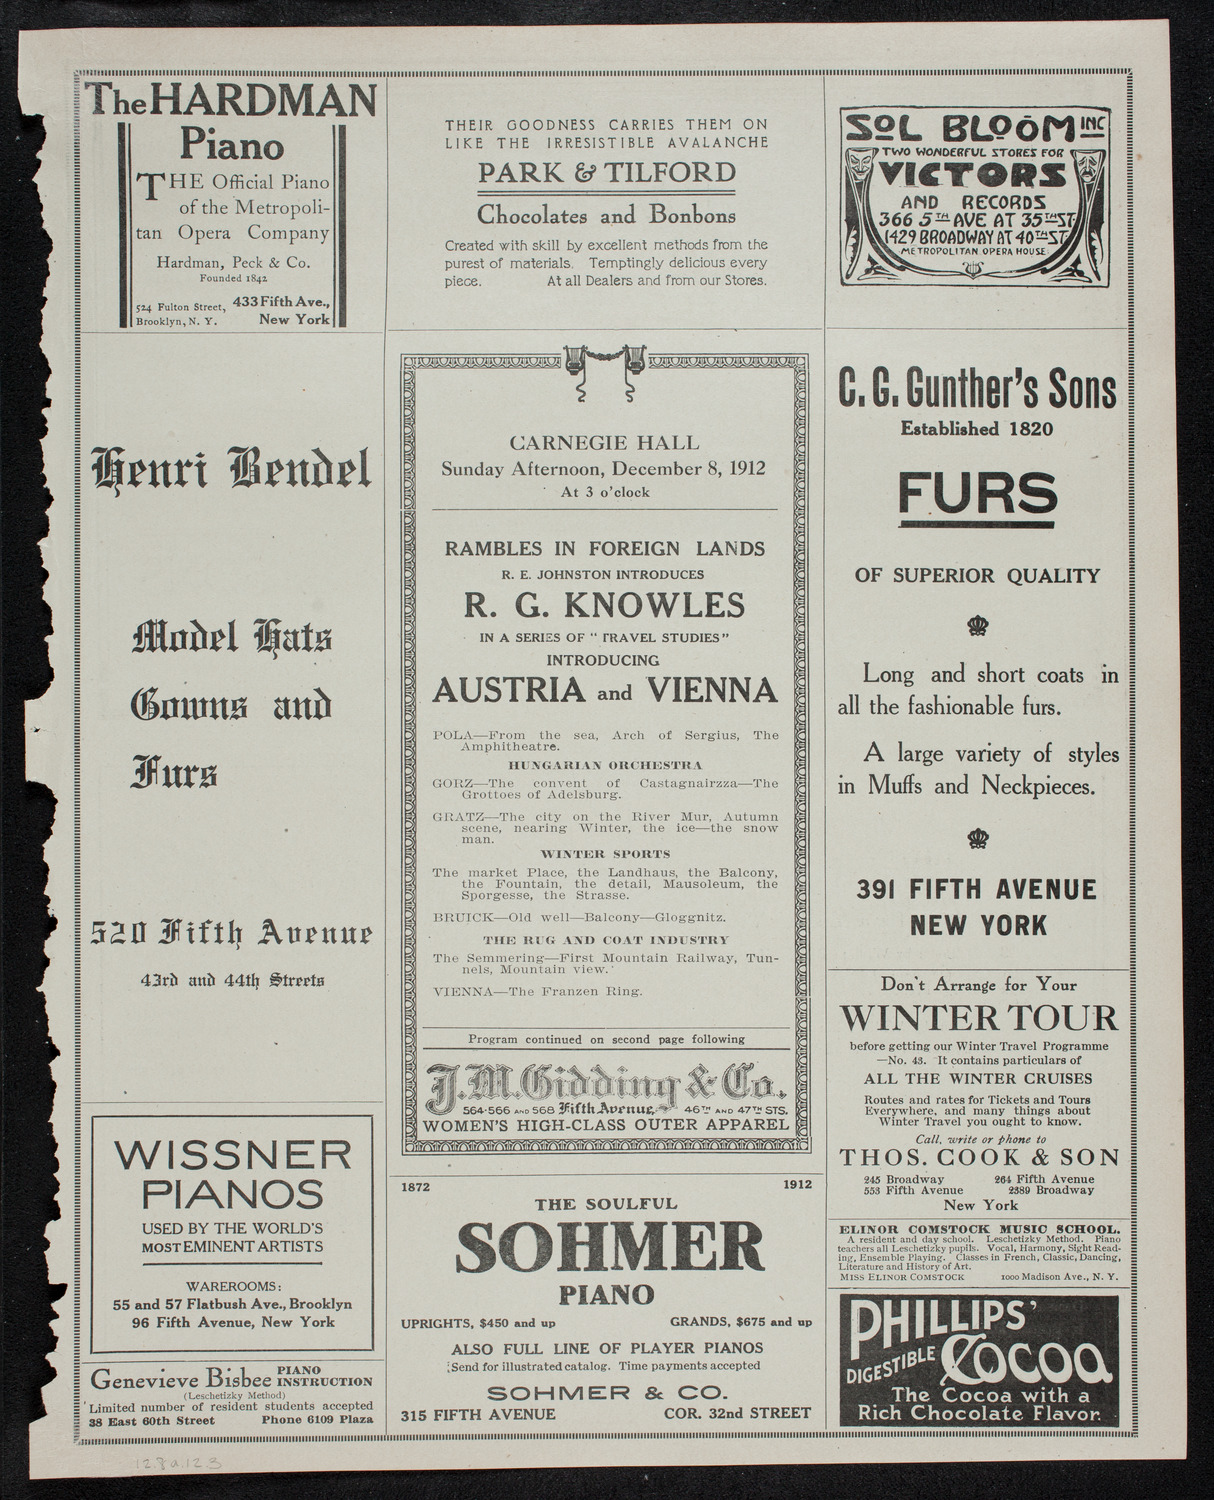 R.G. Knowles Travel Studies: Austria and Vienna, December 8, 1912, program page 5